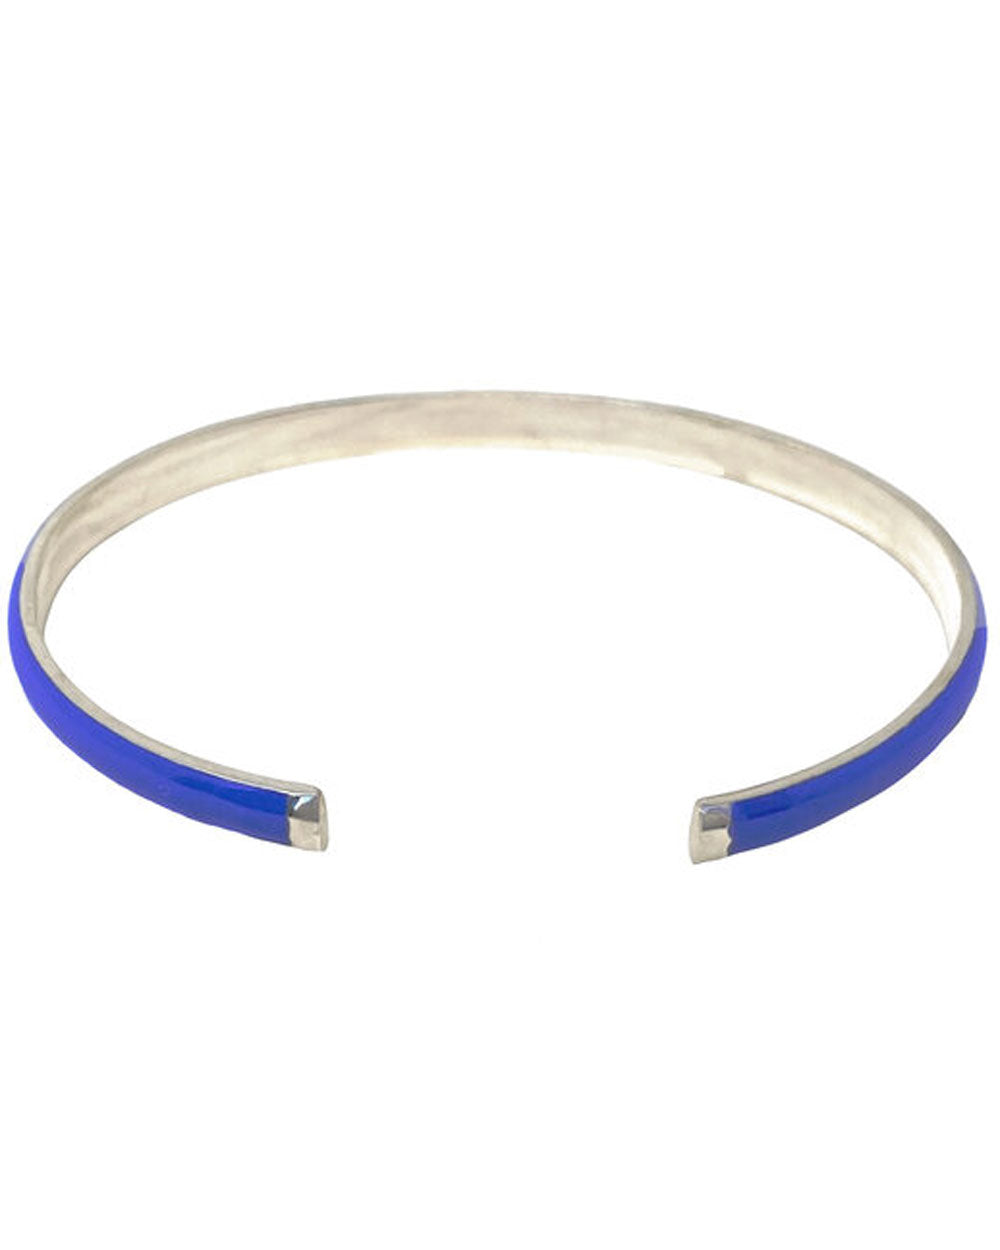 Enamel and Silver Cuff Bracelet in Violet Blue